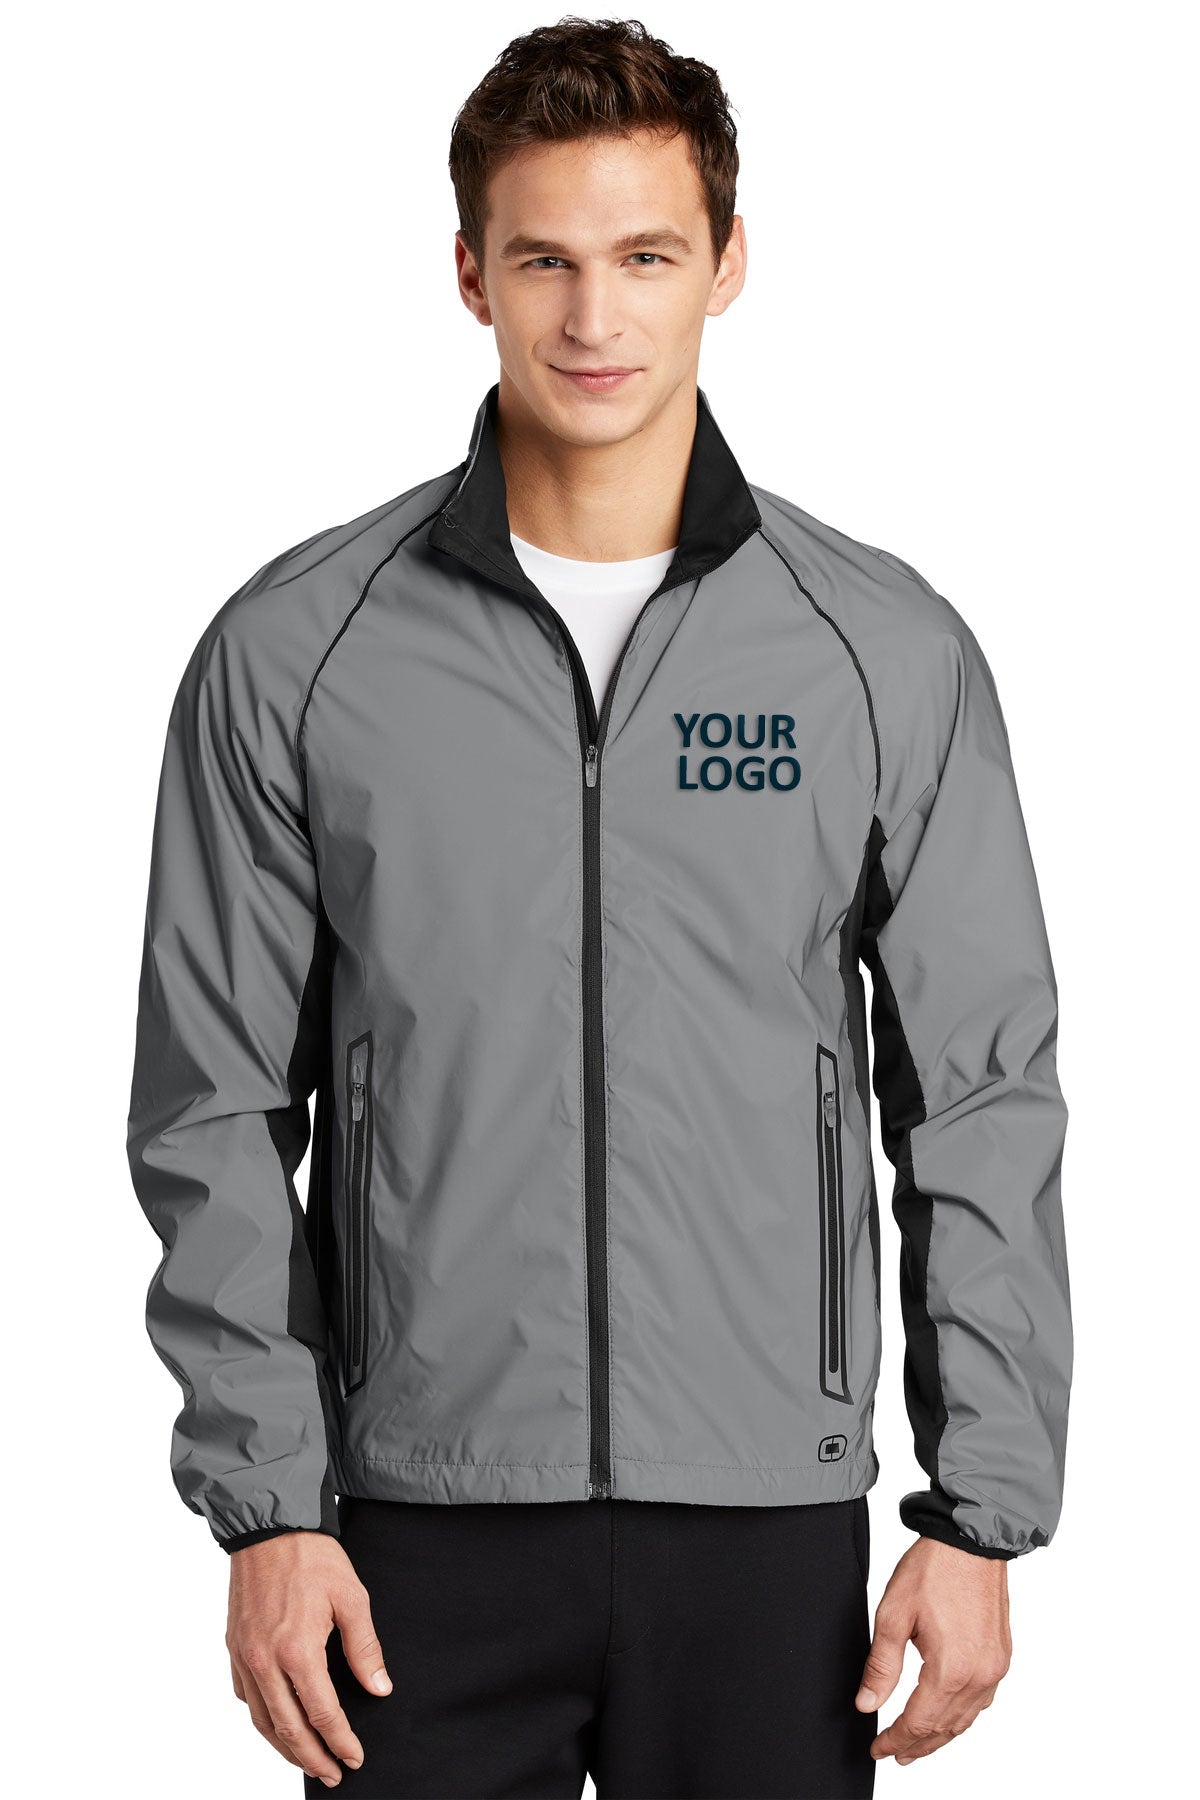 OGIO Endurance Reflective/ Blacktop OE711 company logo jackets